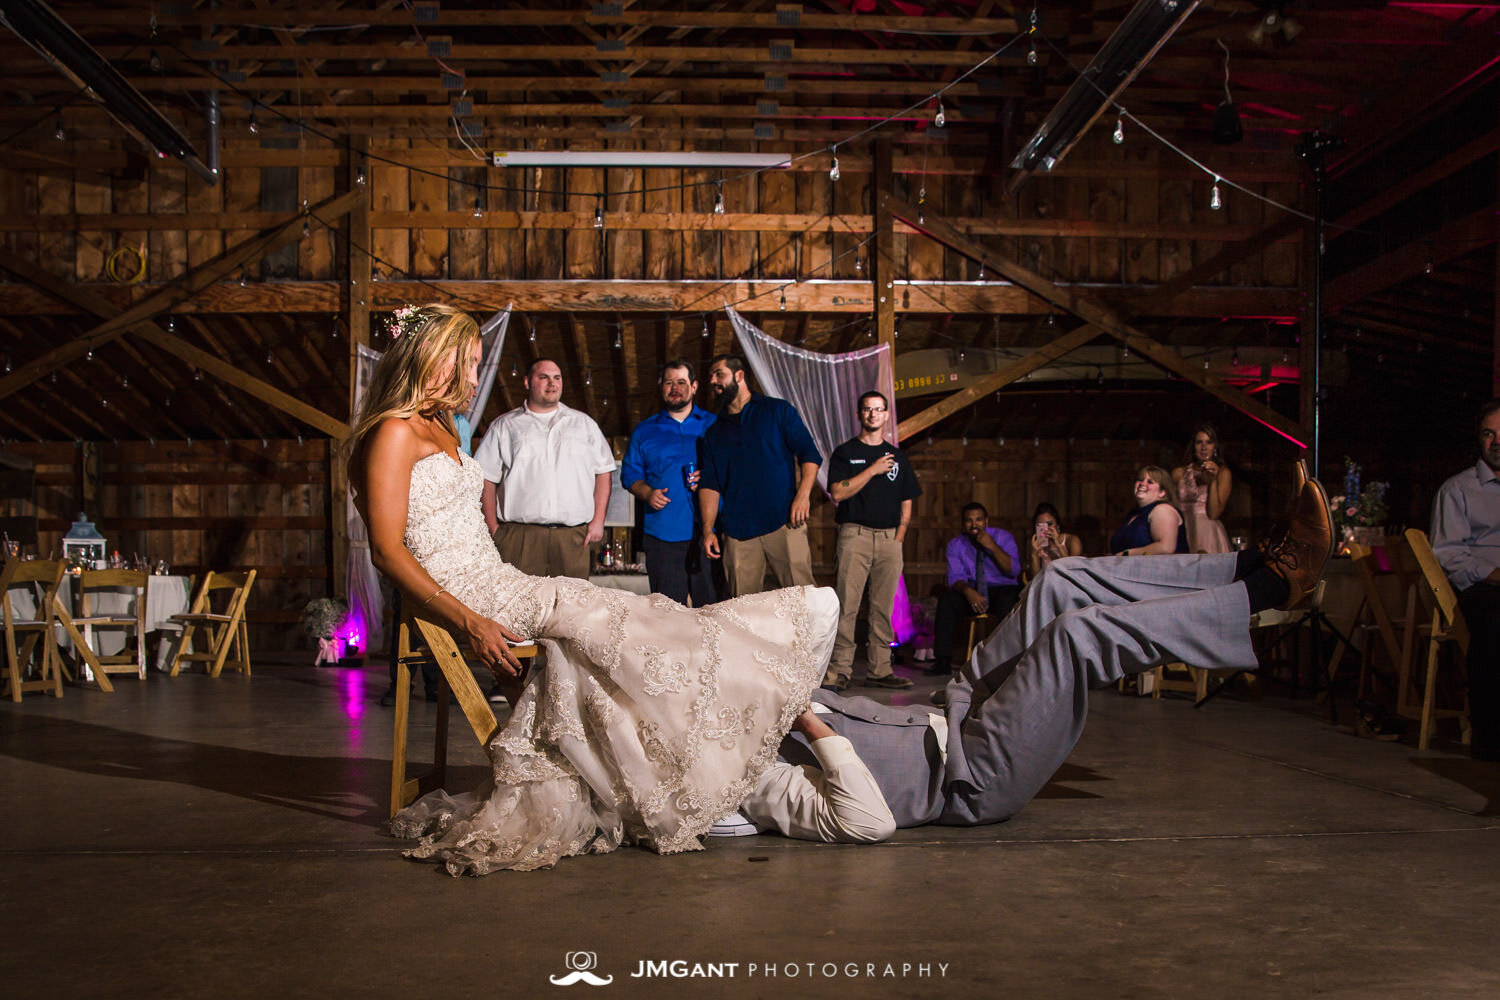  Platte River Fort Wedding | boutquet and garter toss | Greeley Colorado wedding photographer | © JMGant Photography | http://www.jmgantphotography.com/ 